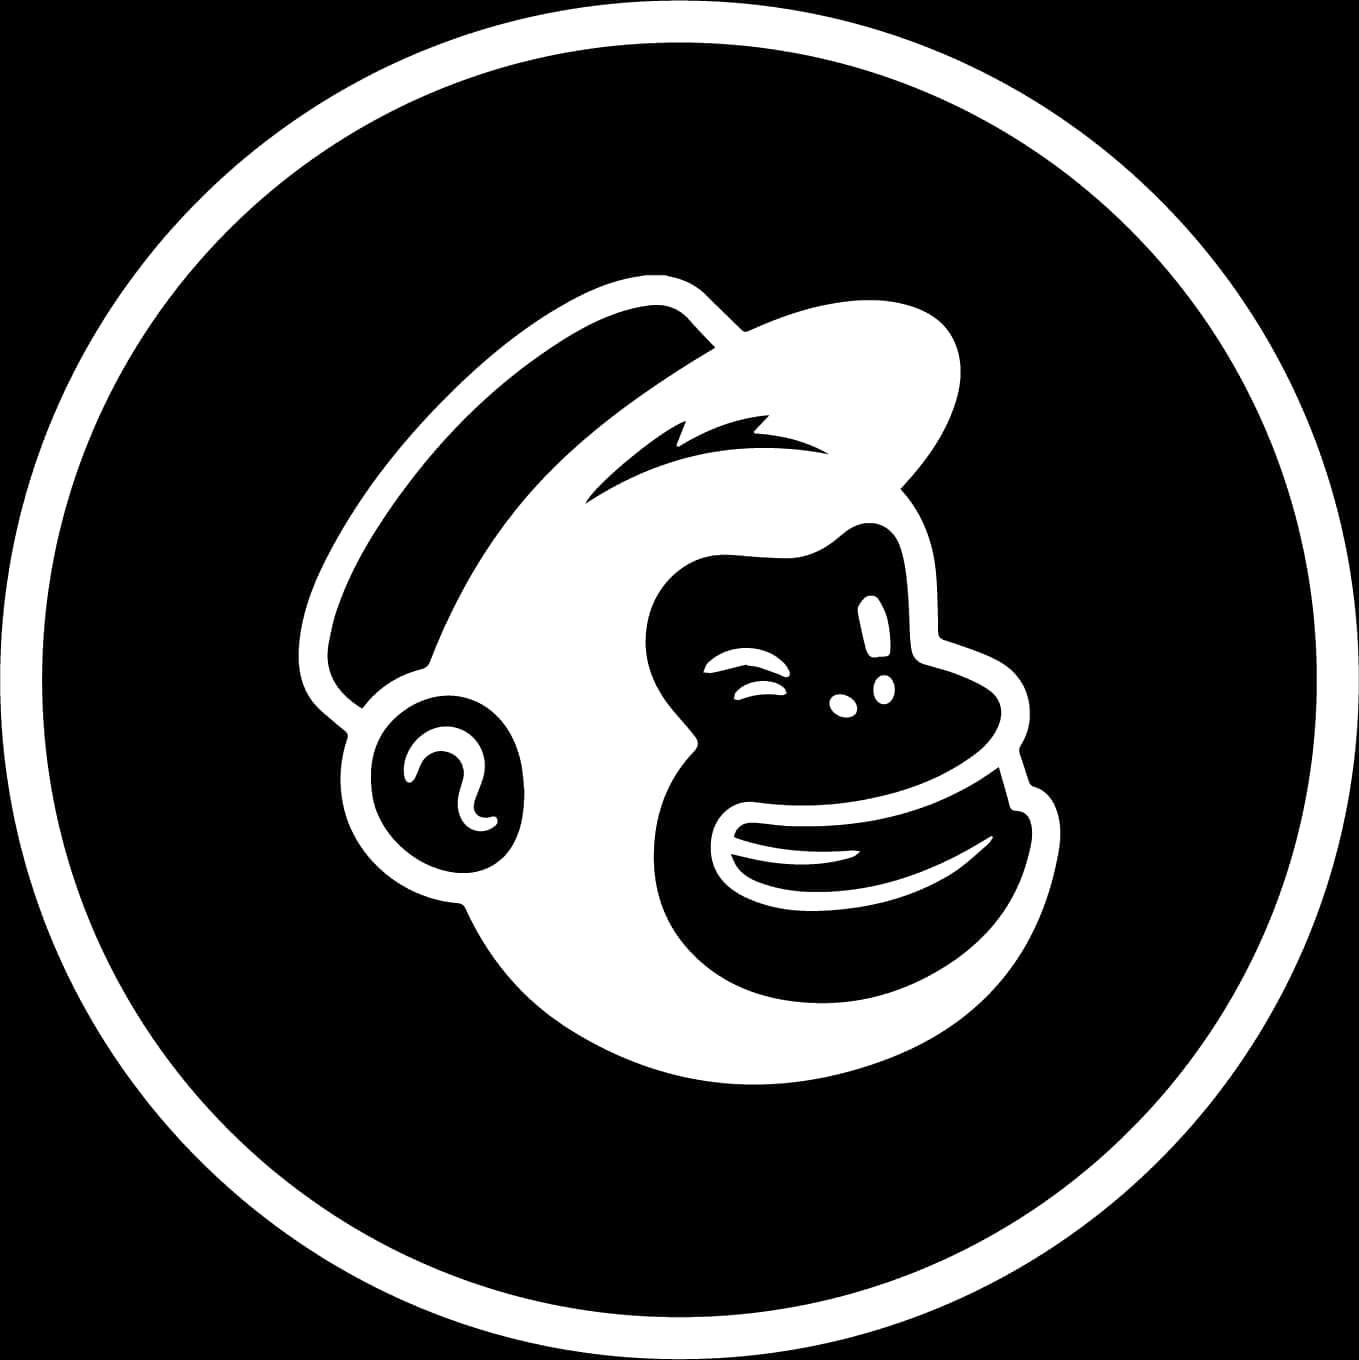 Mailchimp Logo Blackand White PNG image